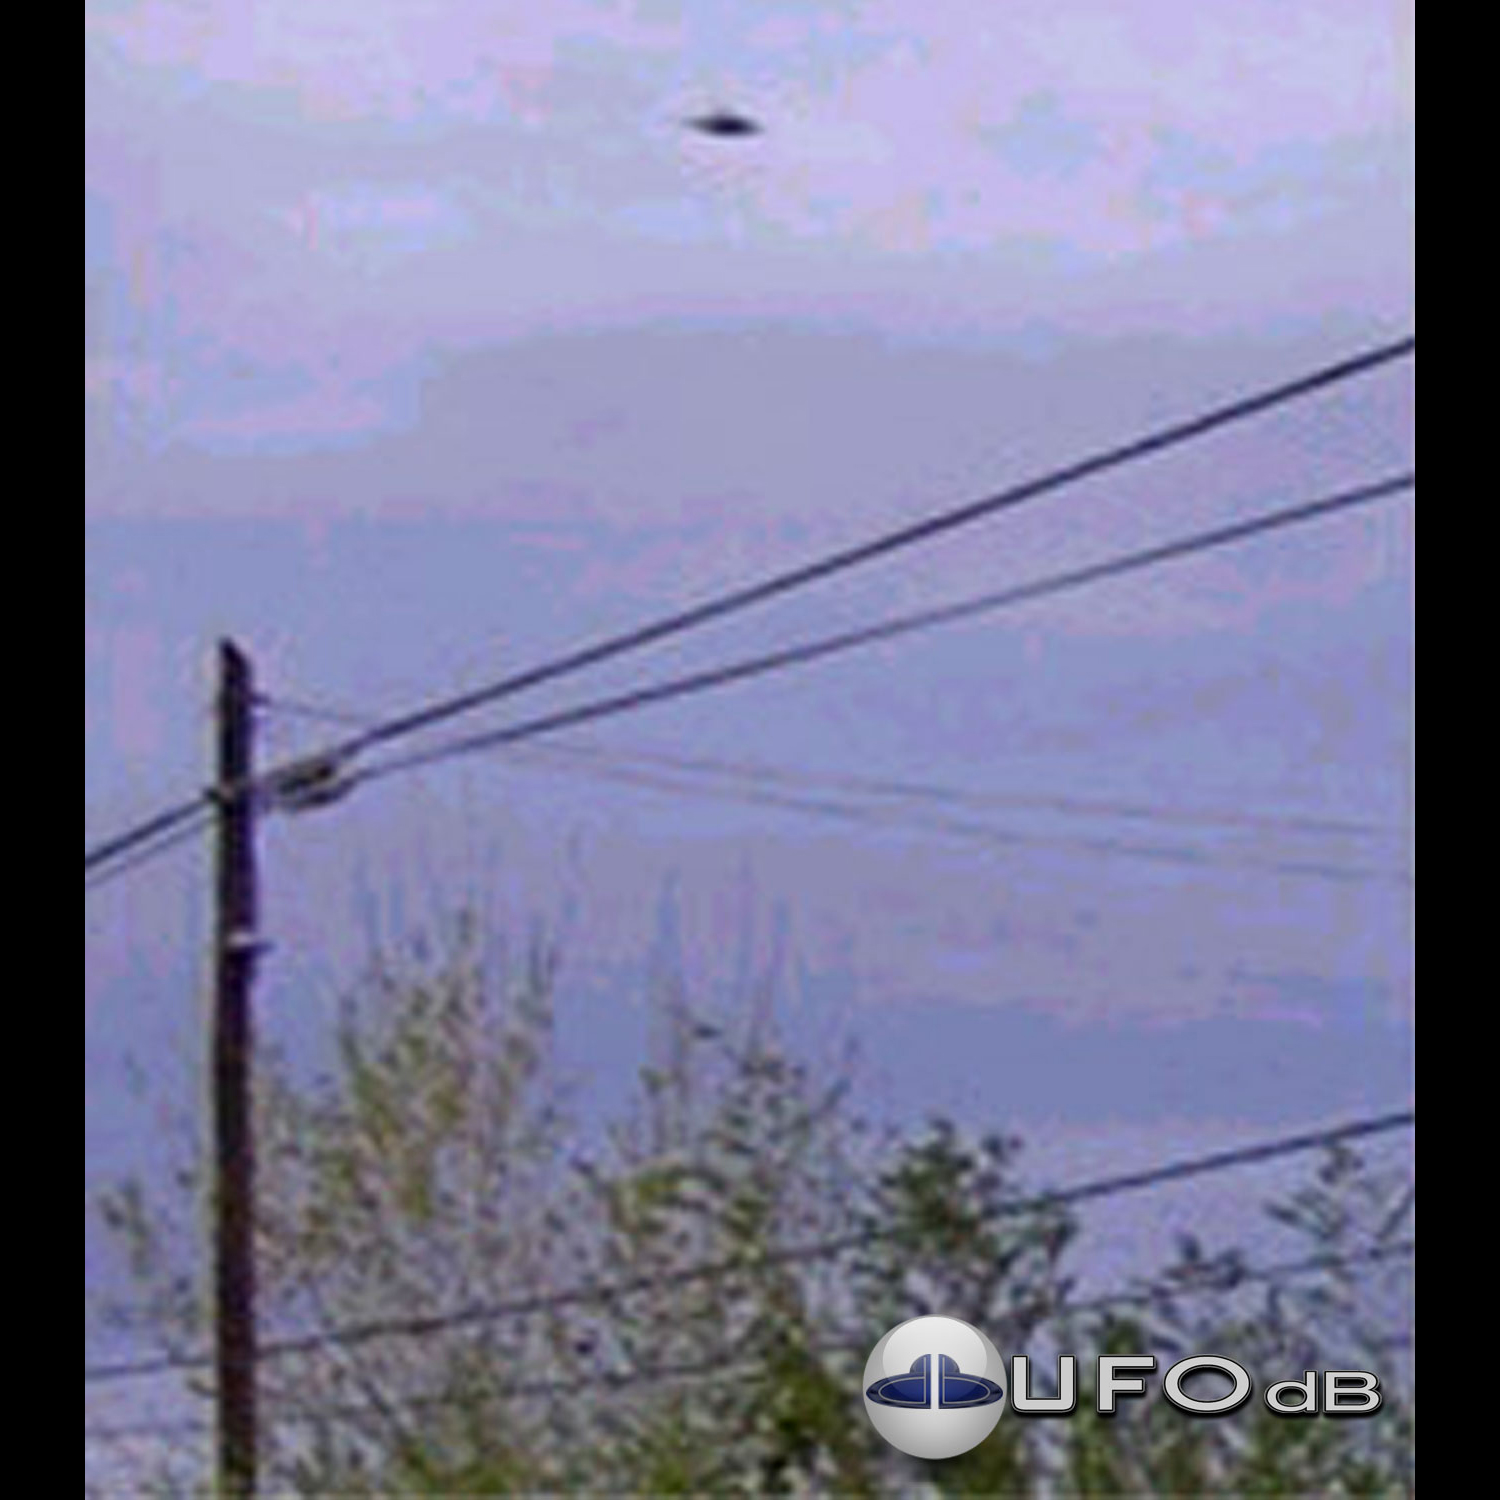 UFO over electric line in grey sky - UFO picture taken in Valcheta UFO Picture #20-1